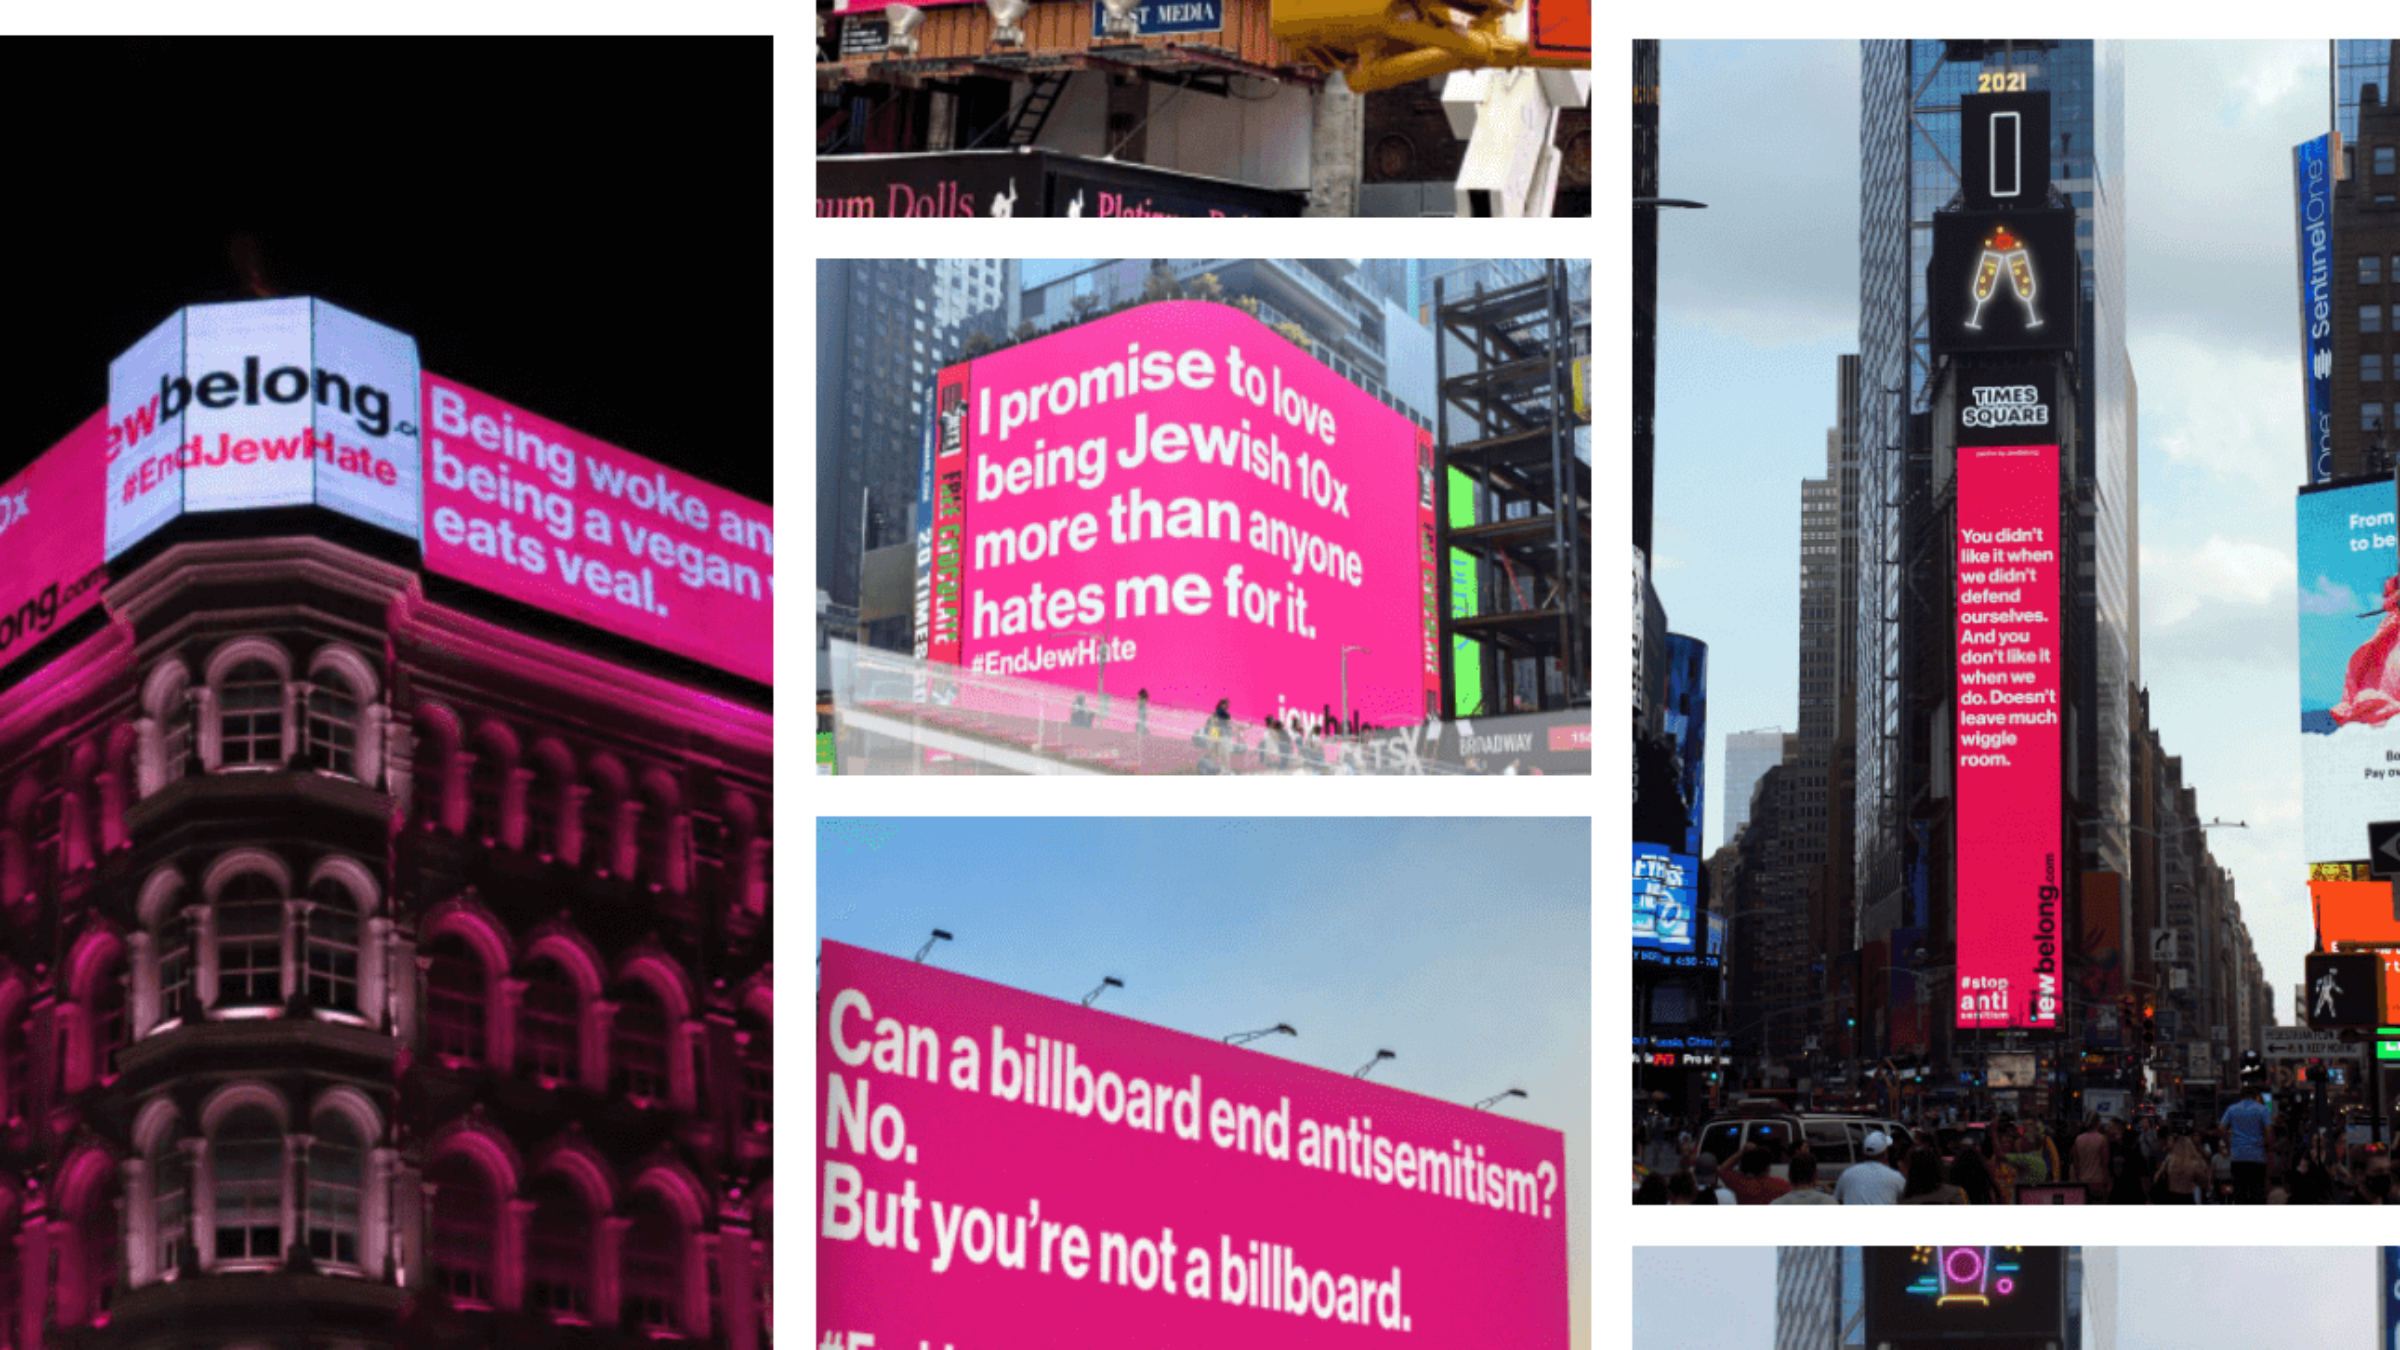 JewBelong has run flashy billboard campaigns decrying antisemitism for several years.